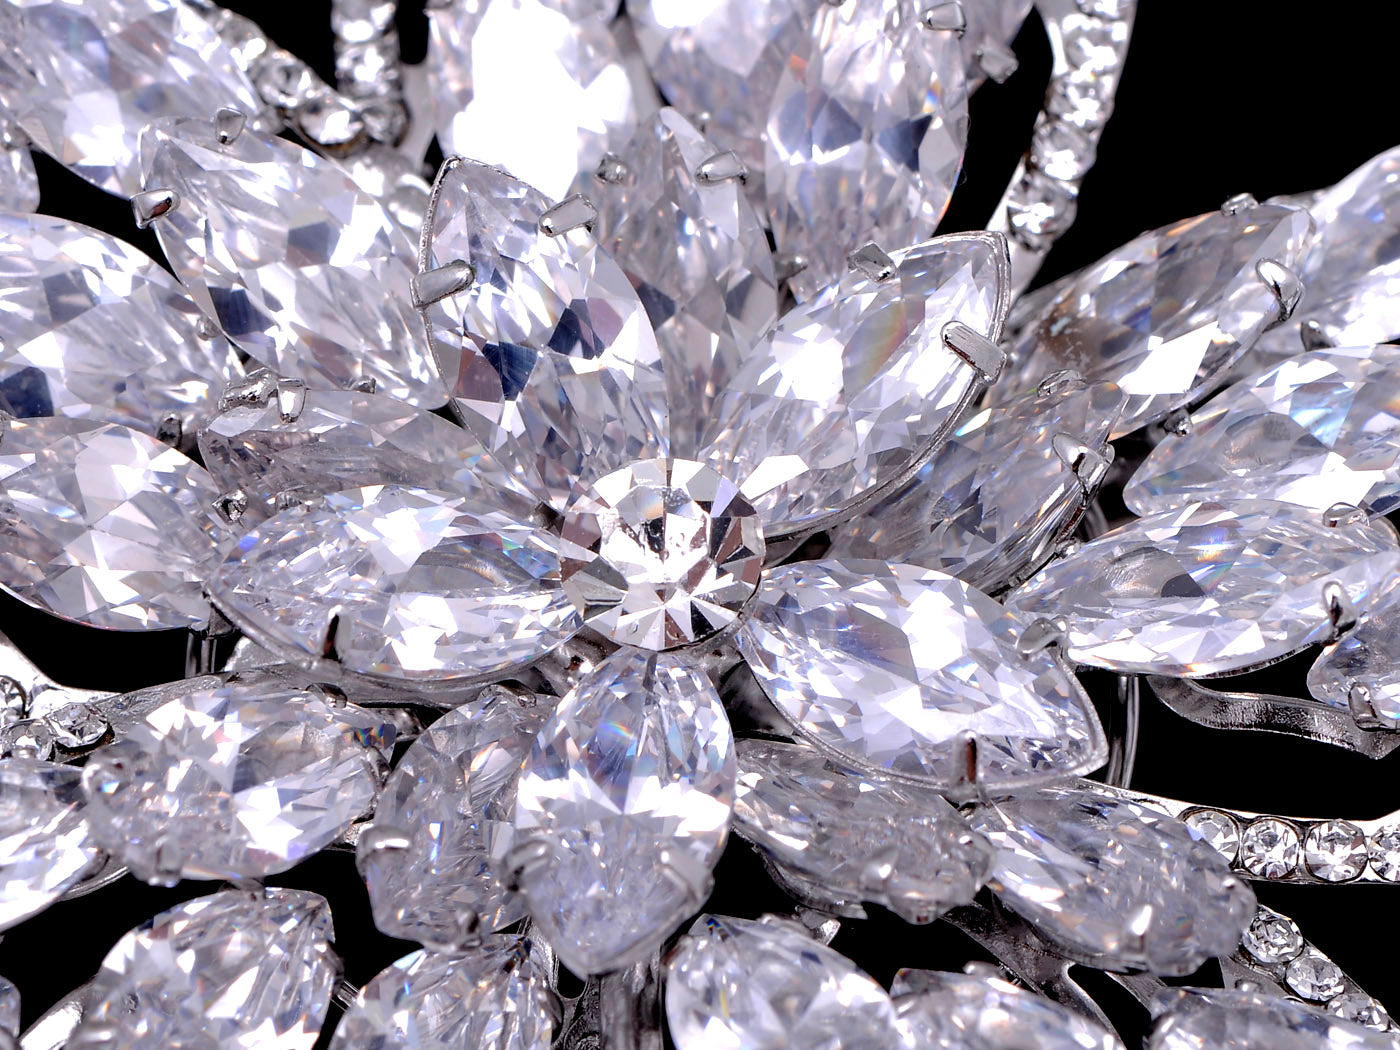 Swarovski Crystal Shine Cutout Five Petal Flower Floral Brooch Pin